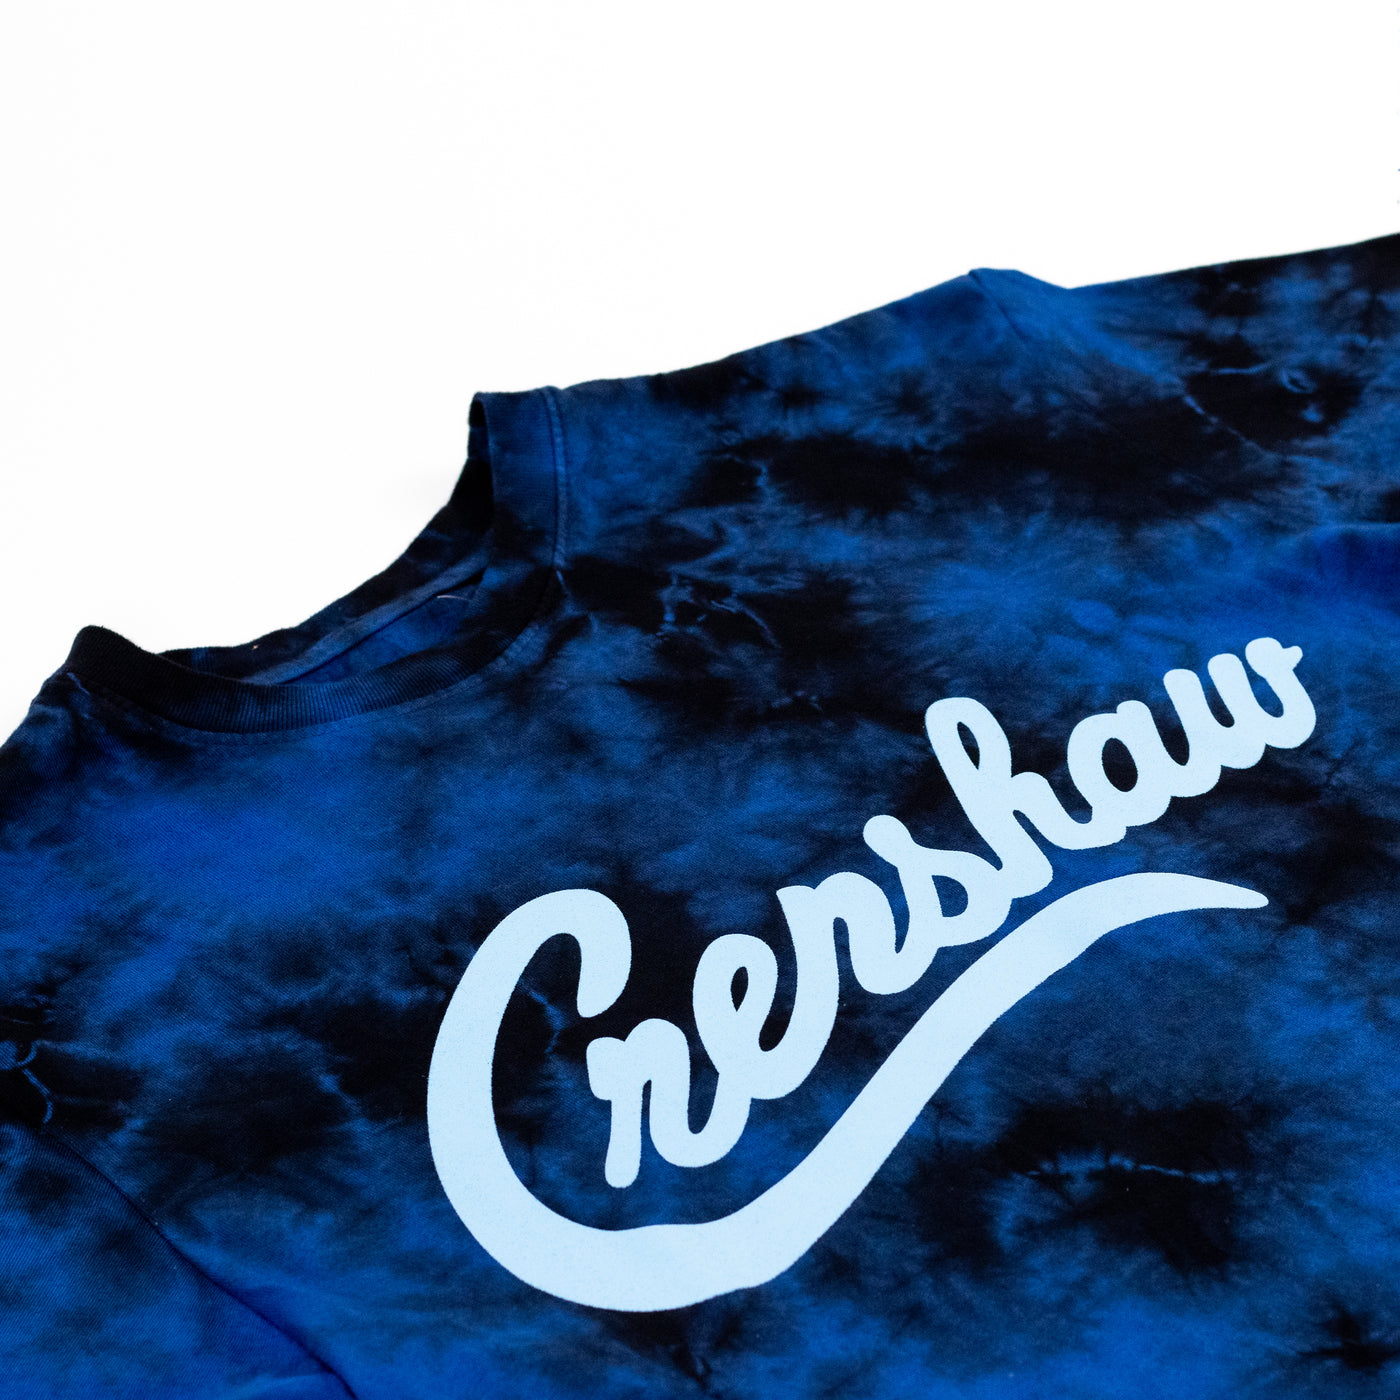 Crenshaw Limited Edition T-shirt - Navy/Indigo Tie Dye - Detail